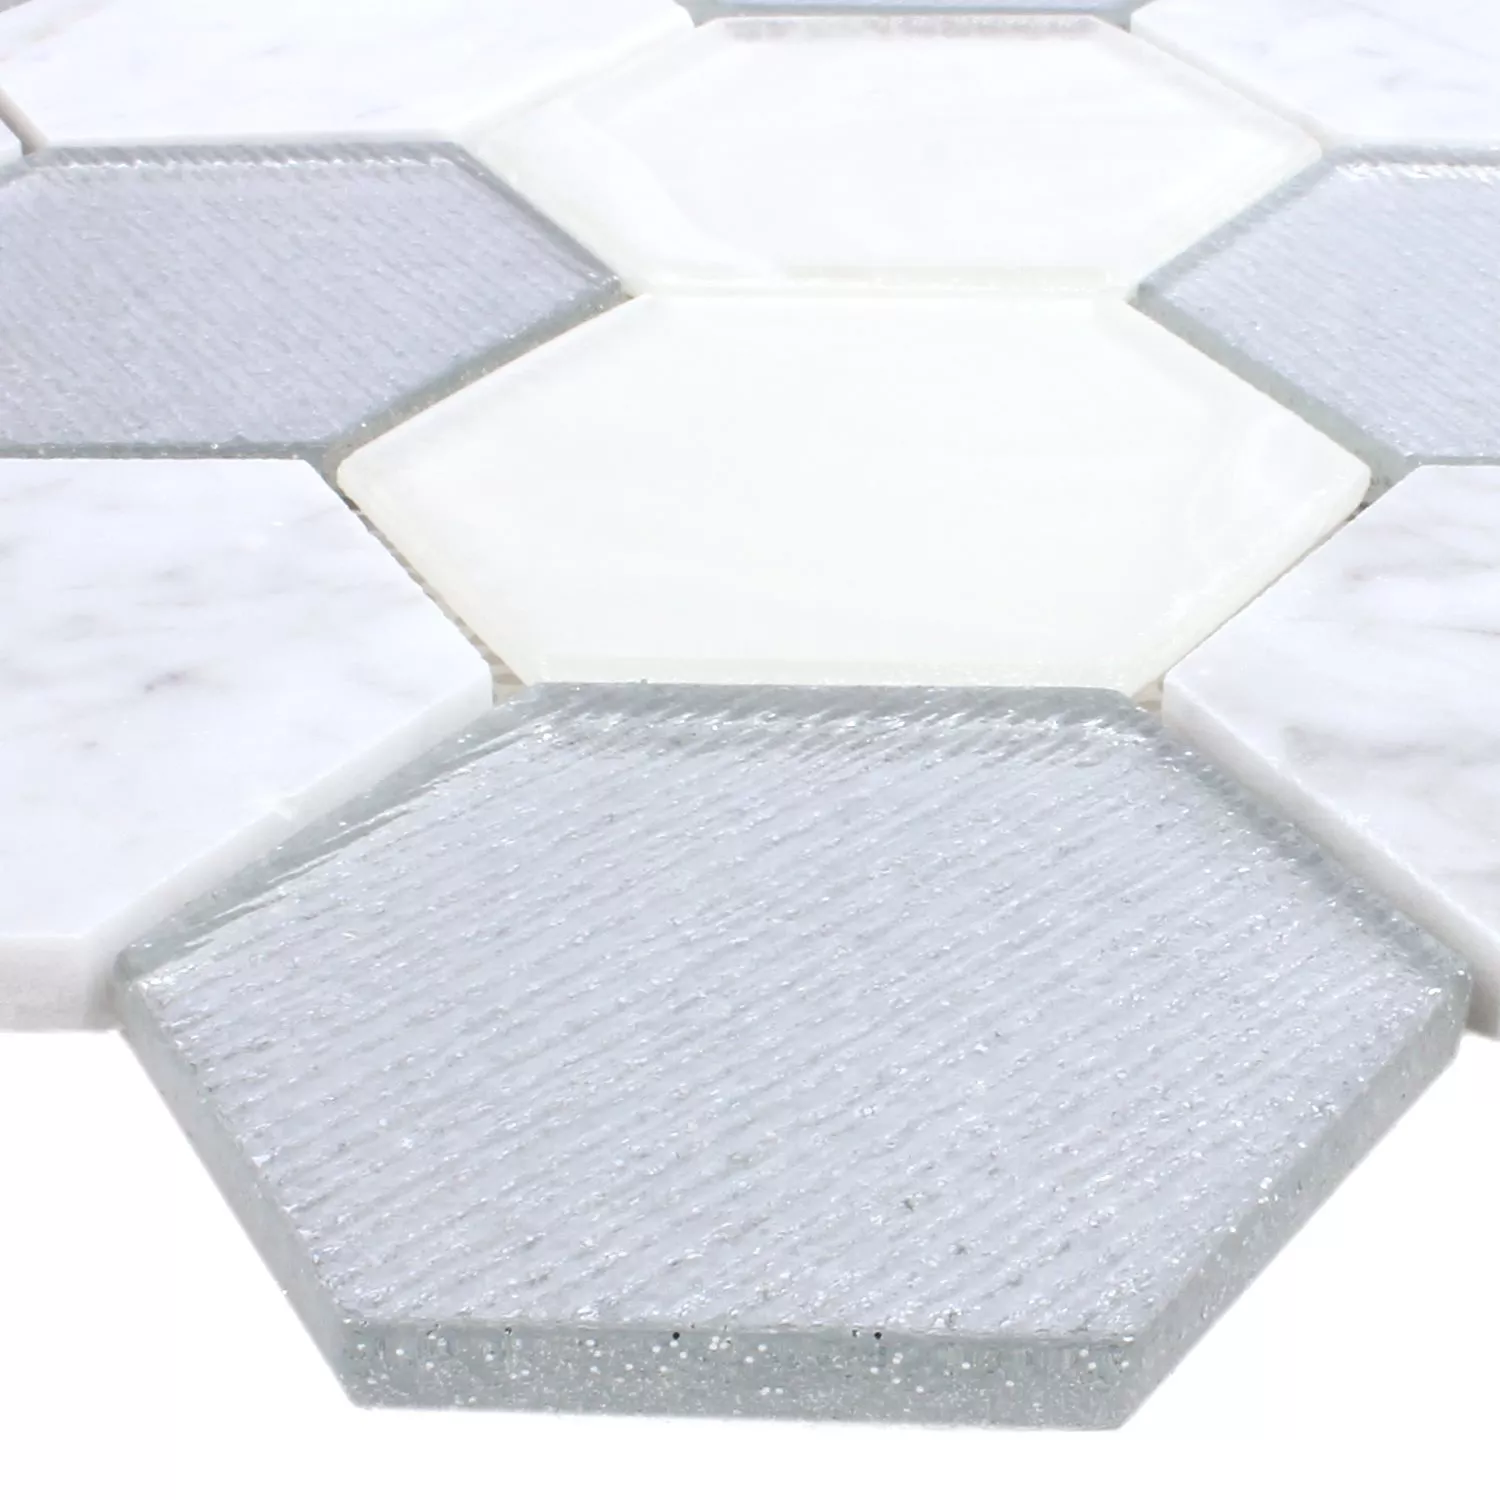 Mosaic Tiles Hexagon Lipari Silver Grey